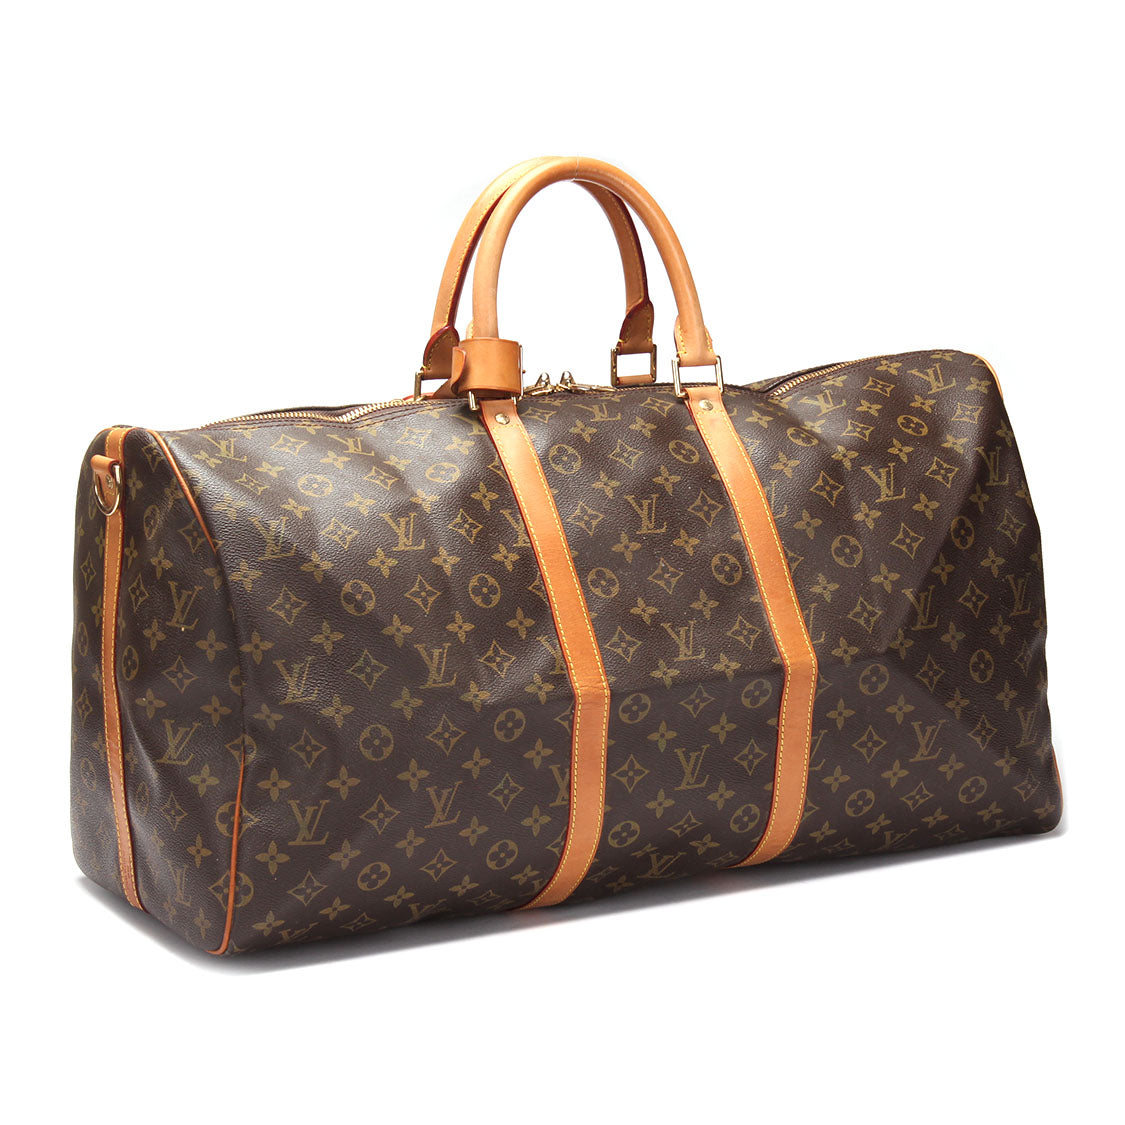 Louis Vuitton Monogram Keepall 55 Canvas Travel Bag in Good condition